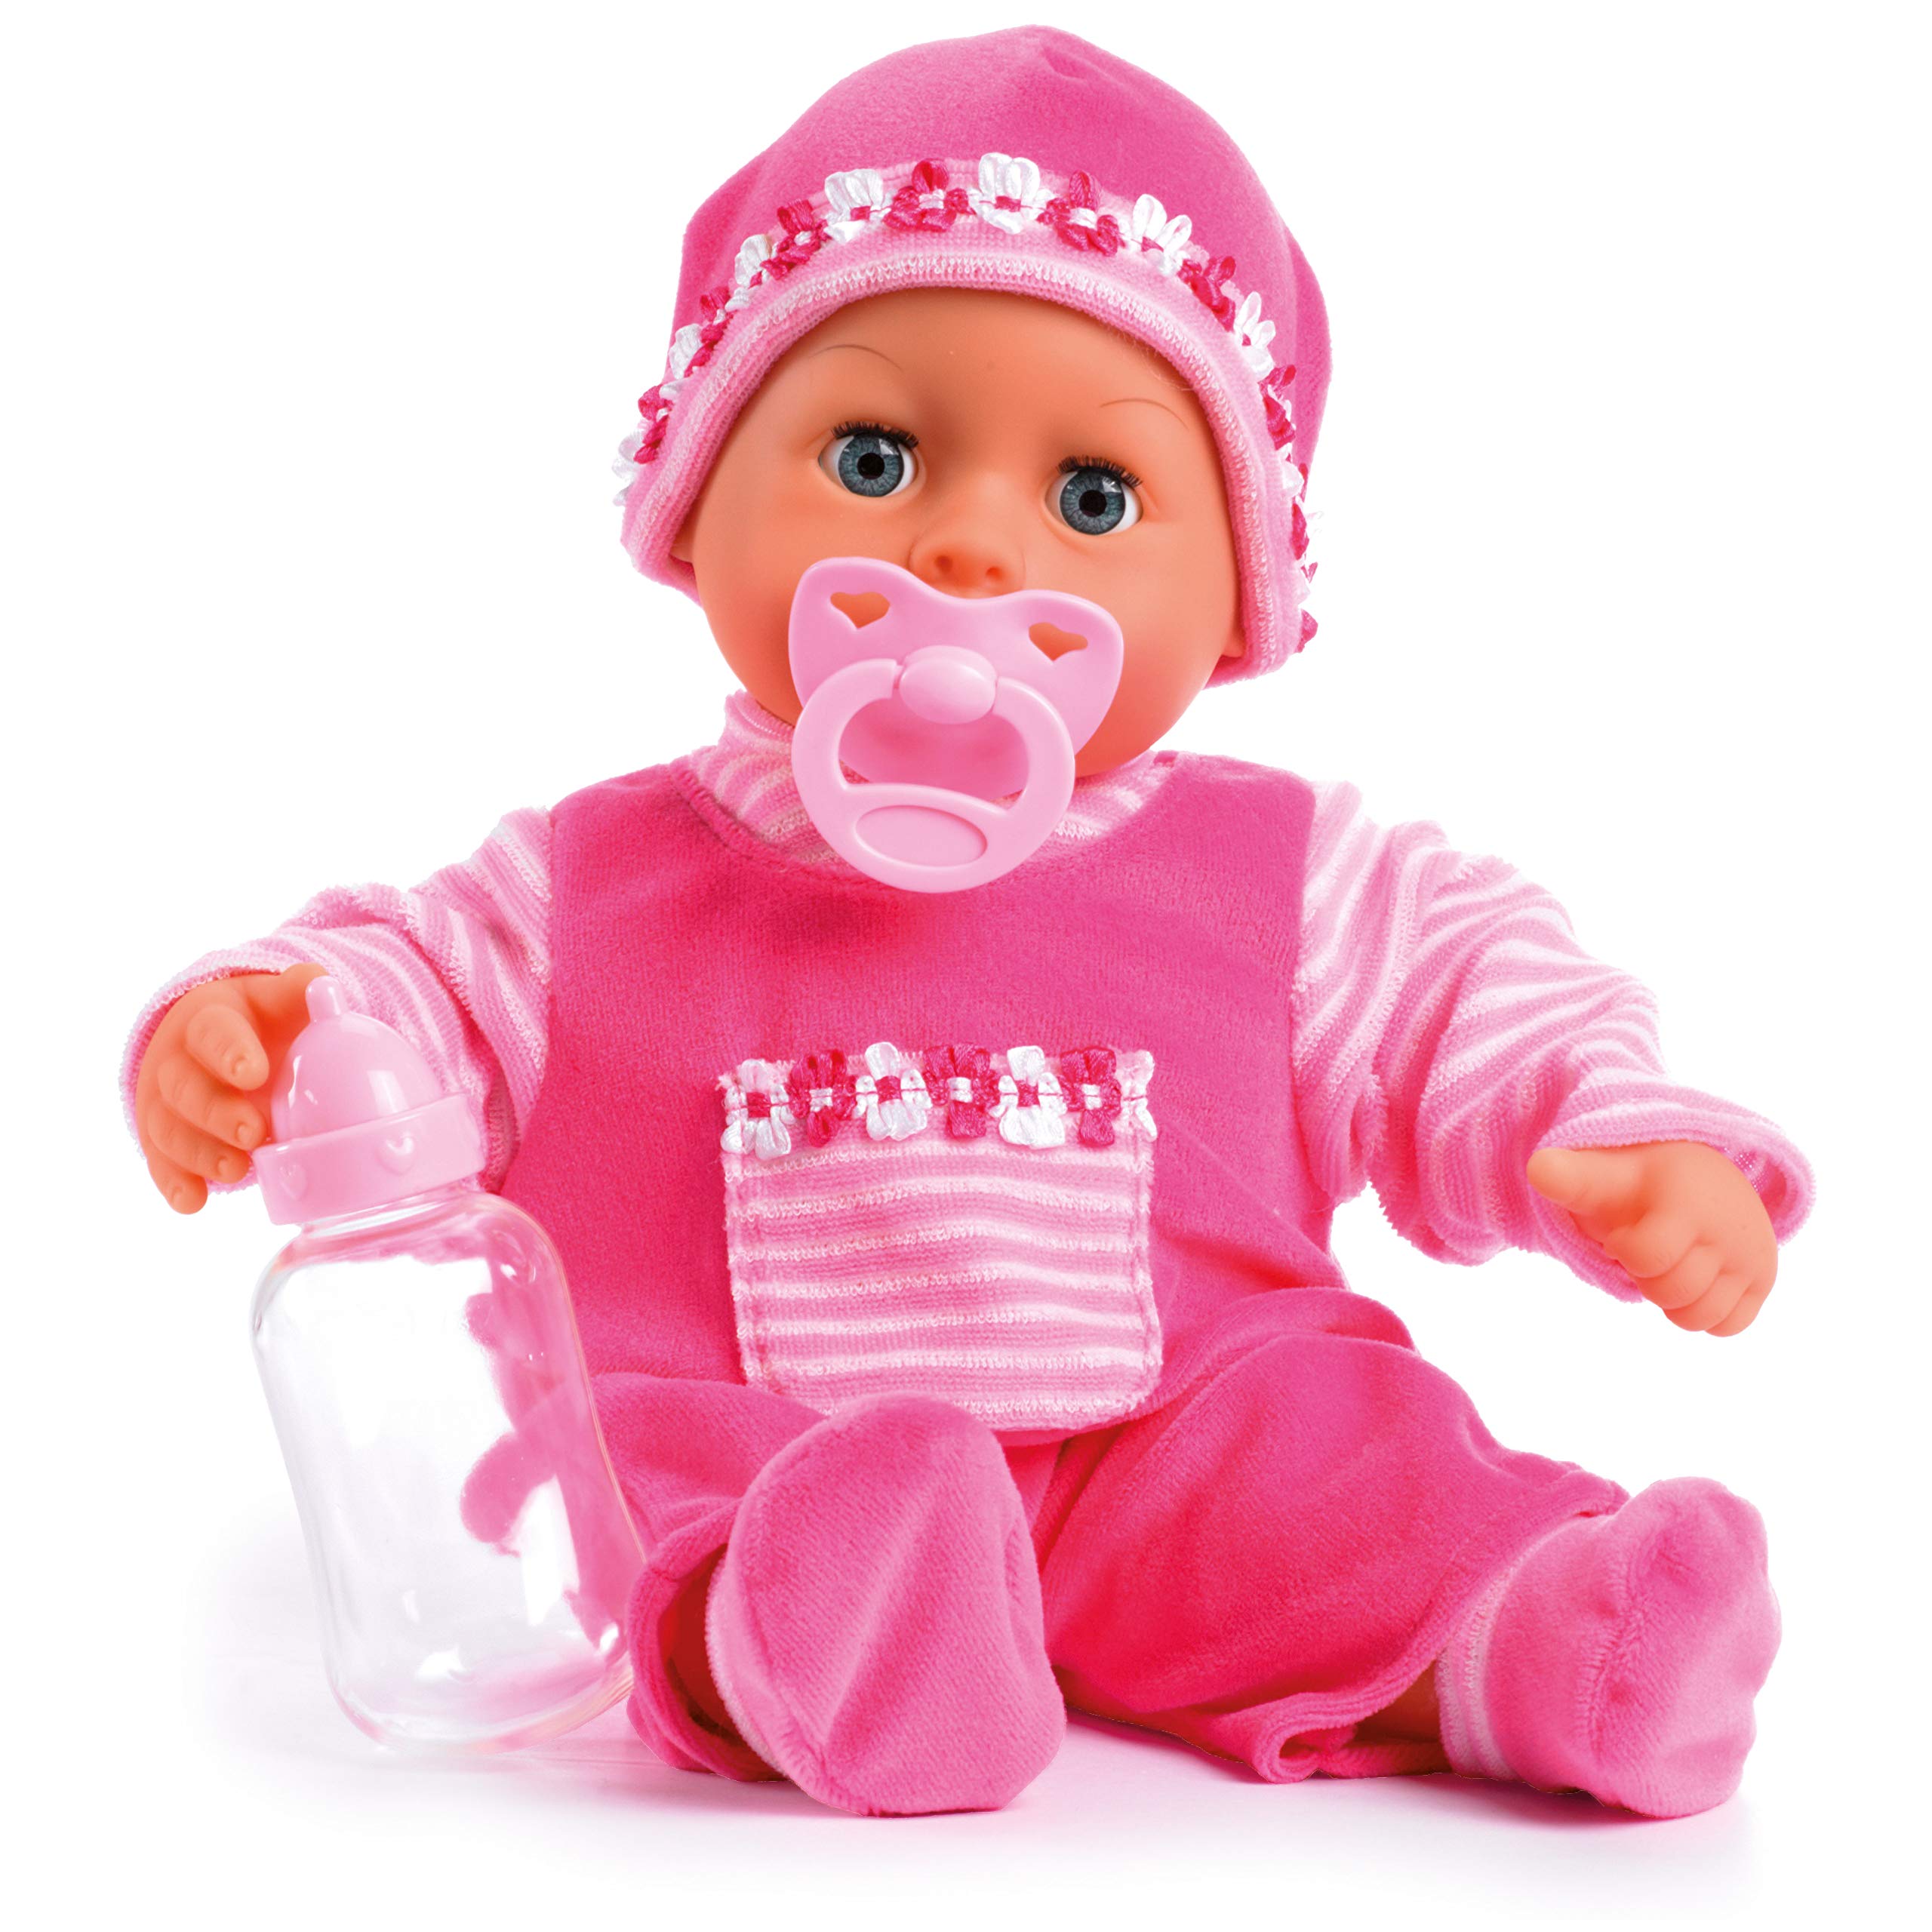 Pink plush doll